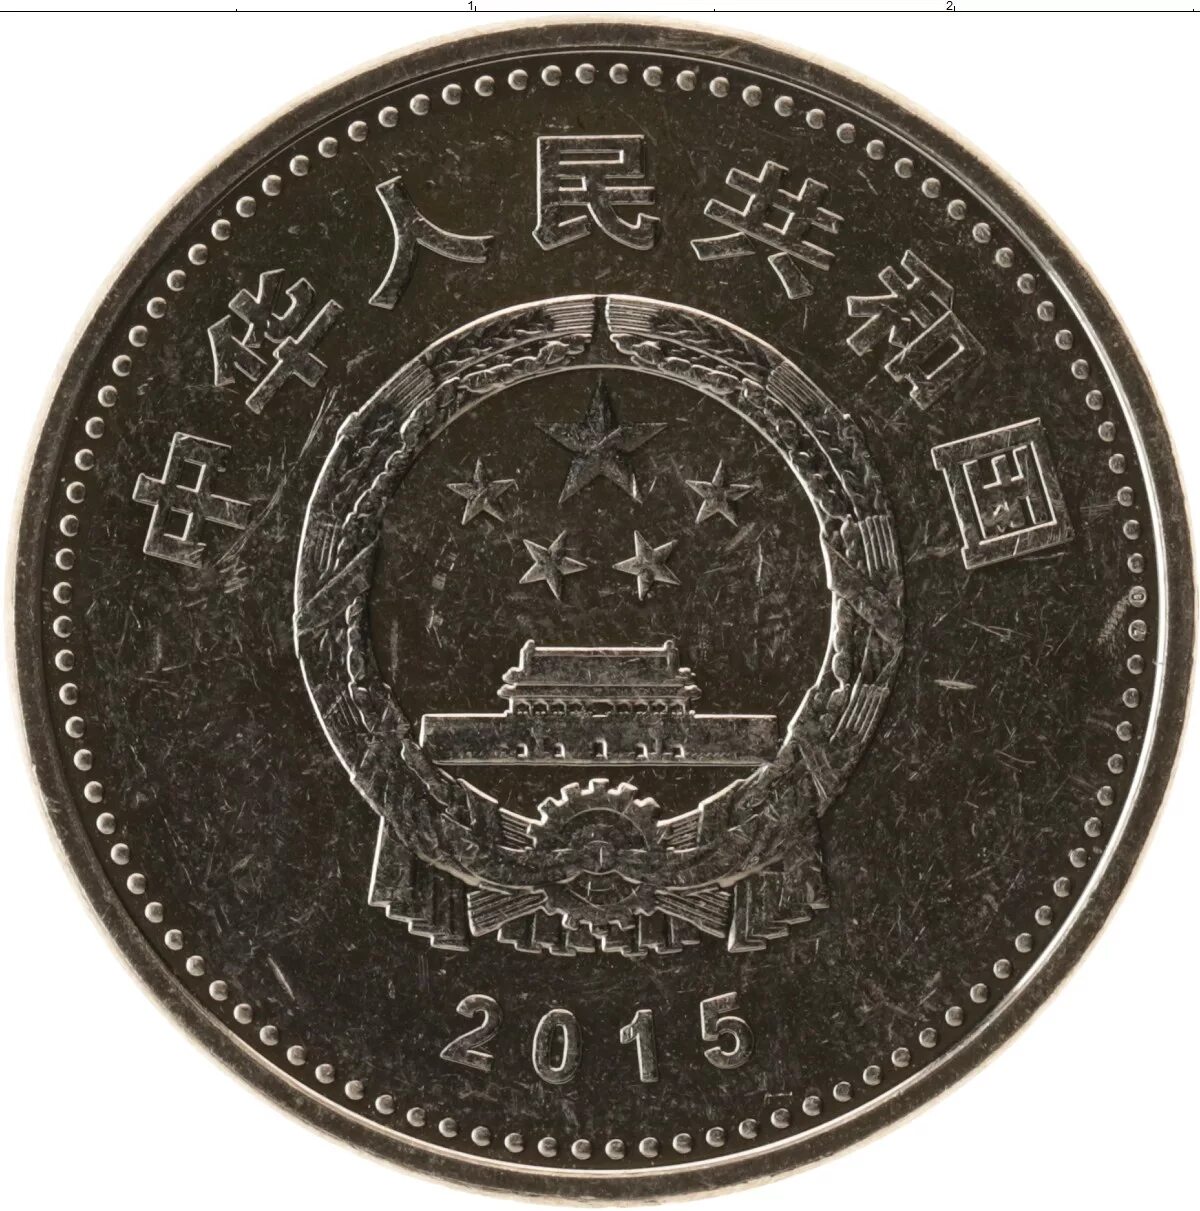 Китайский юань монеты. 1 Юань 2015. Китайская монета 1. 1 Юань монета 2015. 9100 Китайских йен.